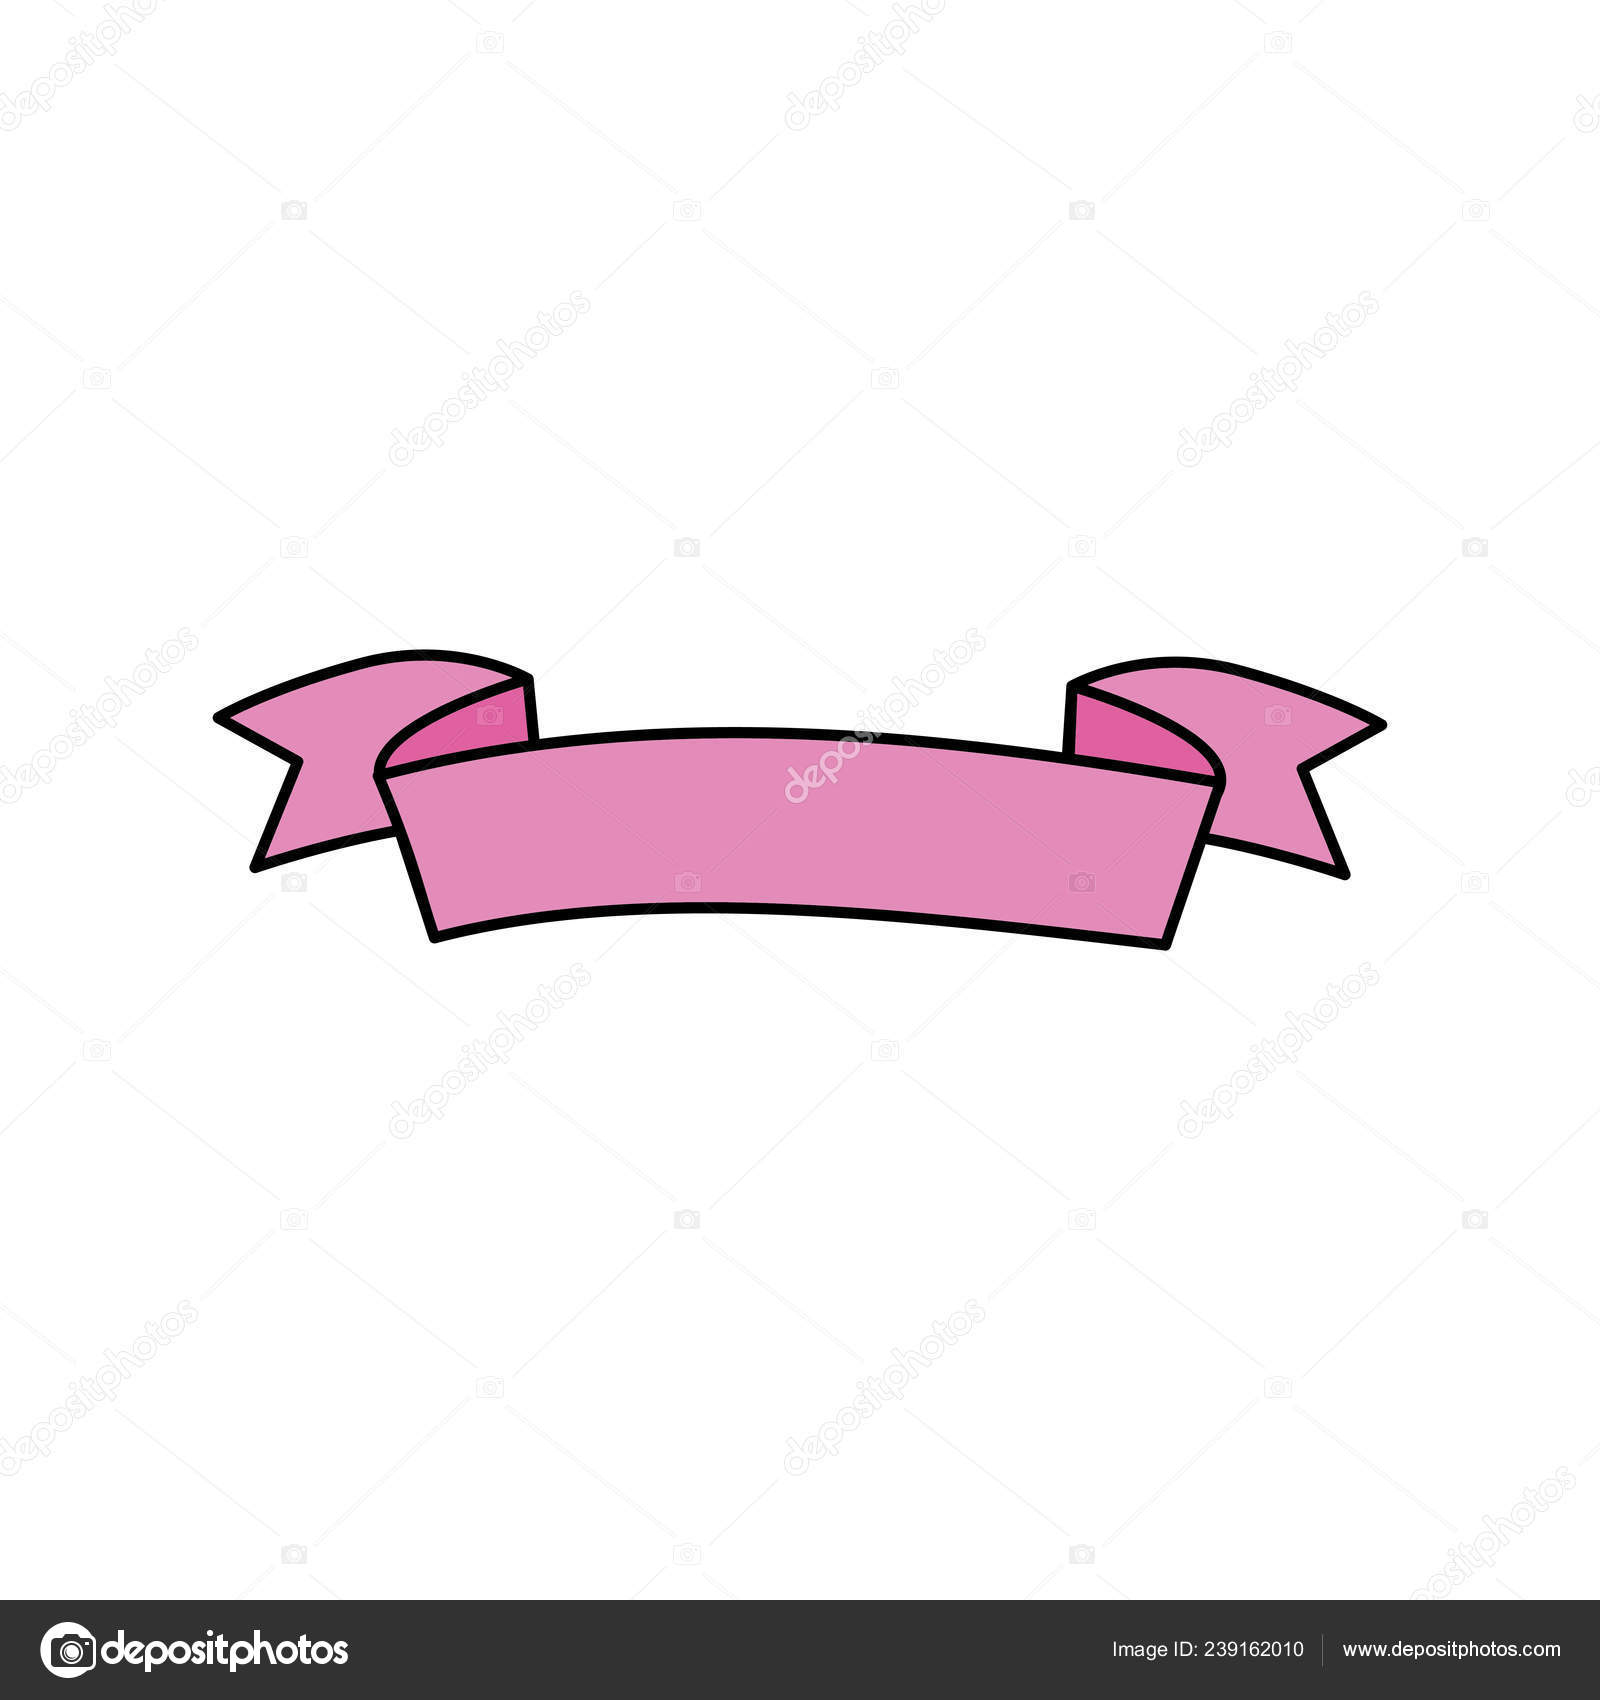 https://st4.depositphotos.com/11953928/23916/v/1600/depositphotos_239162010-stock-illustration-cute-ribbon-decoration-design-vector.jpg